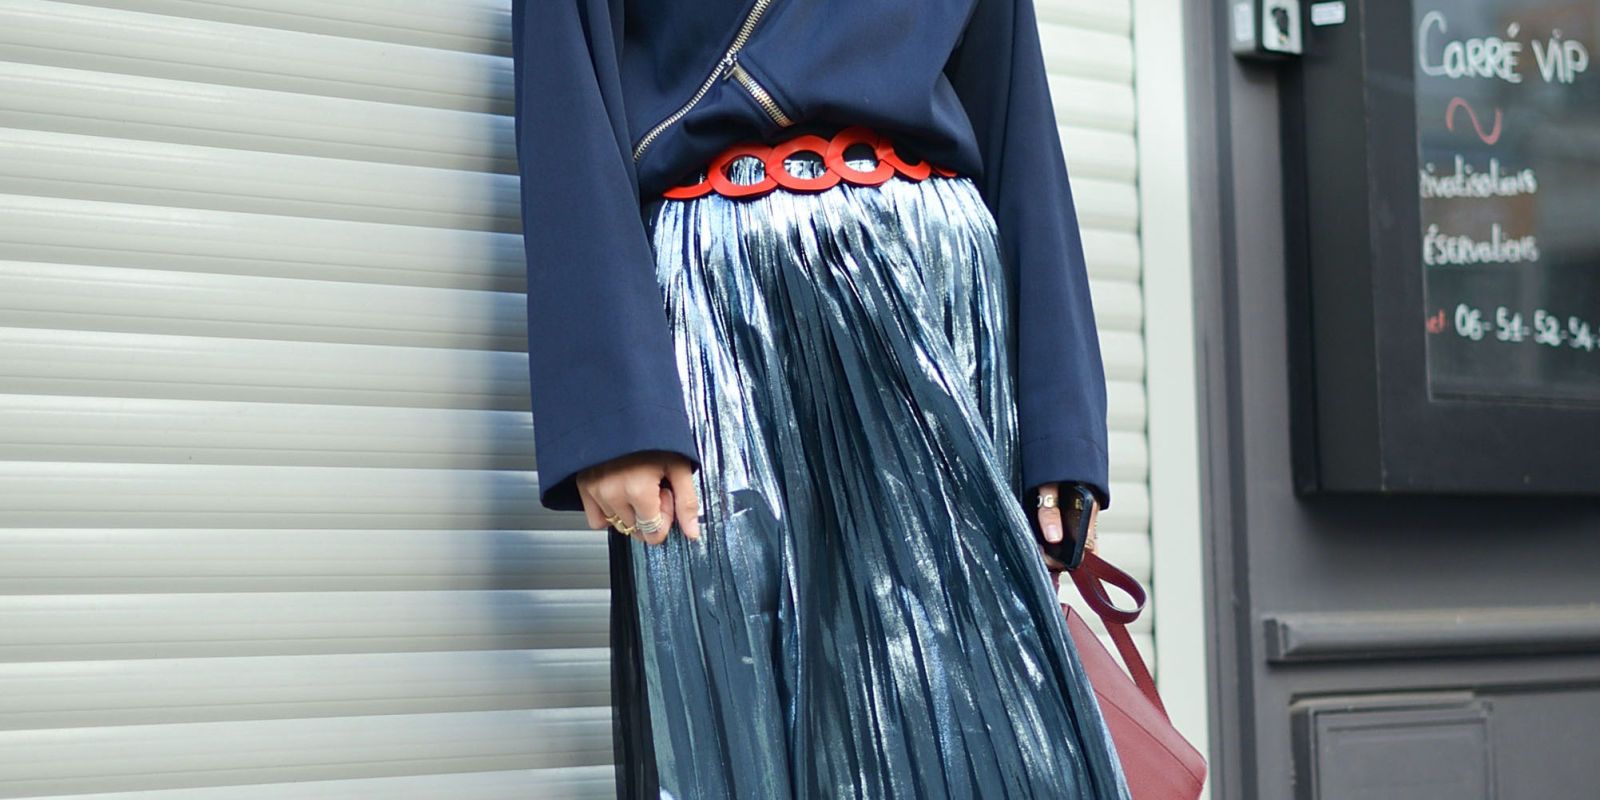 metallic pleated skirt dress